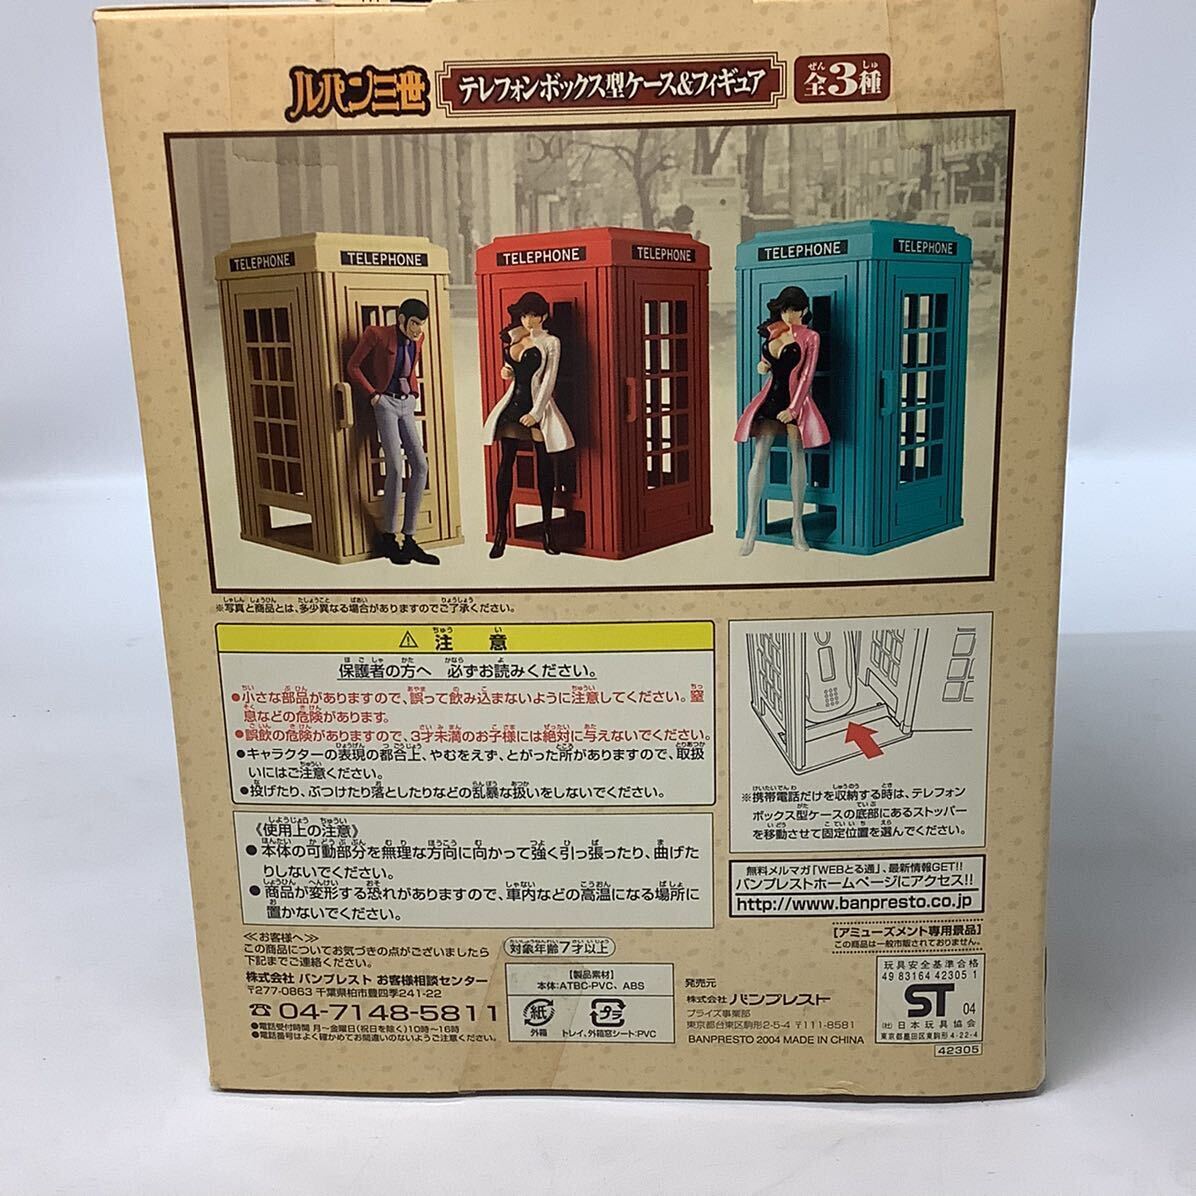 [1 иен старт ] Lupin III телефон box type кейс & фигурка [ Lupin ]|( управление IK-01473)